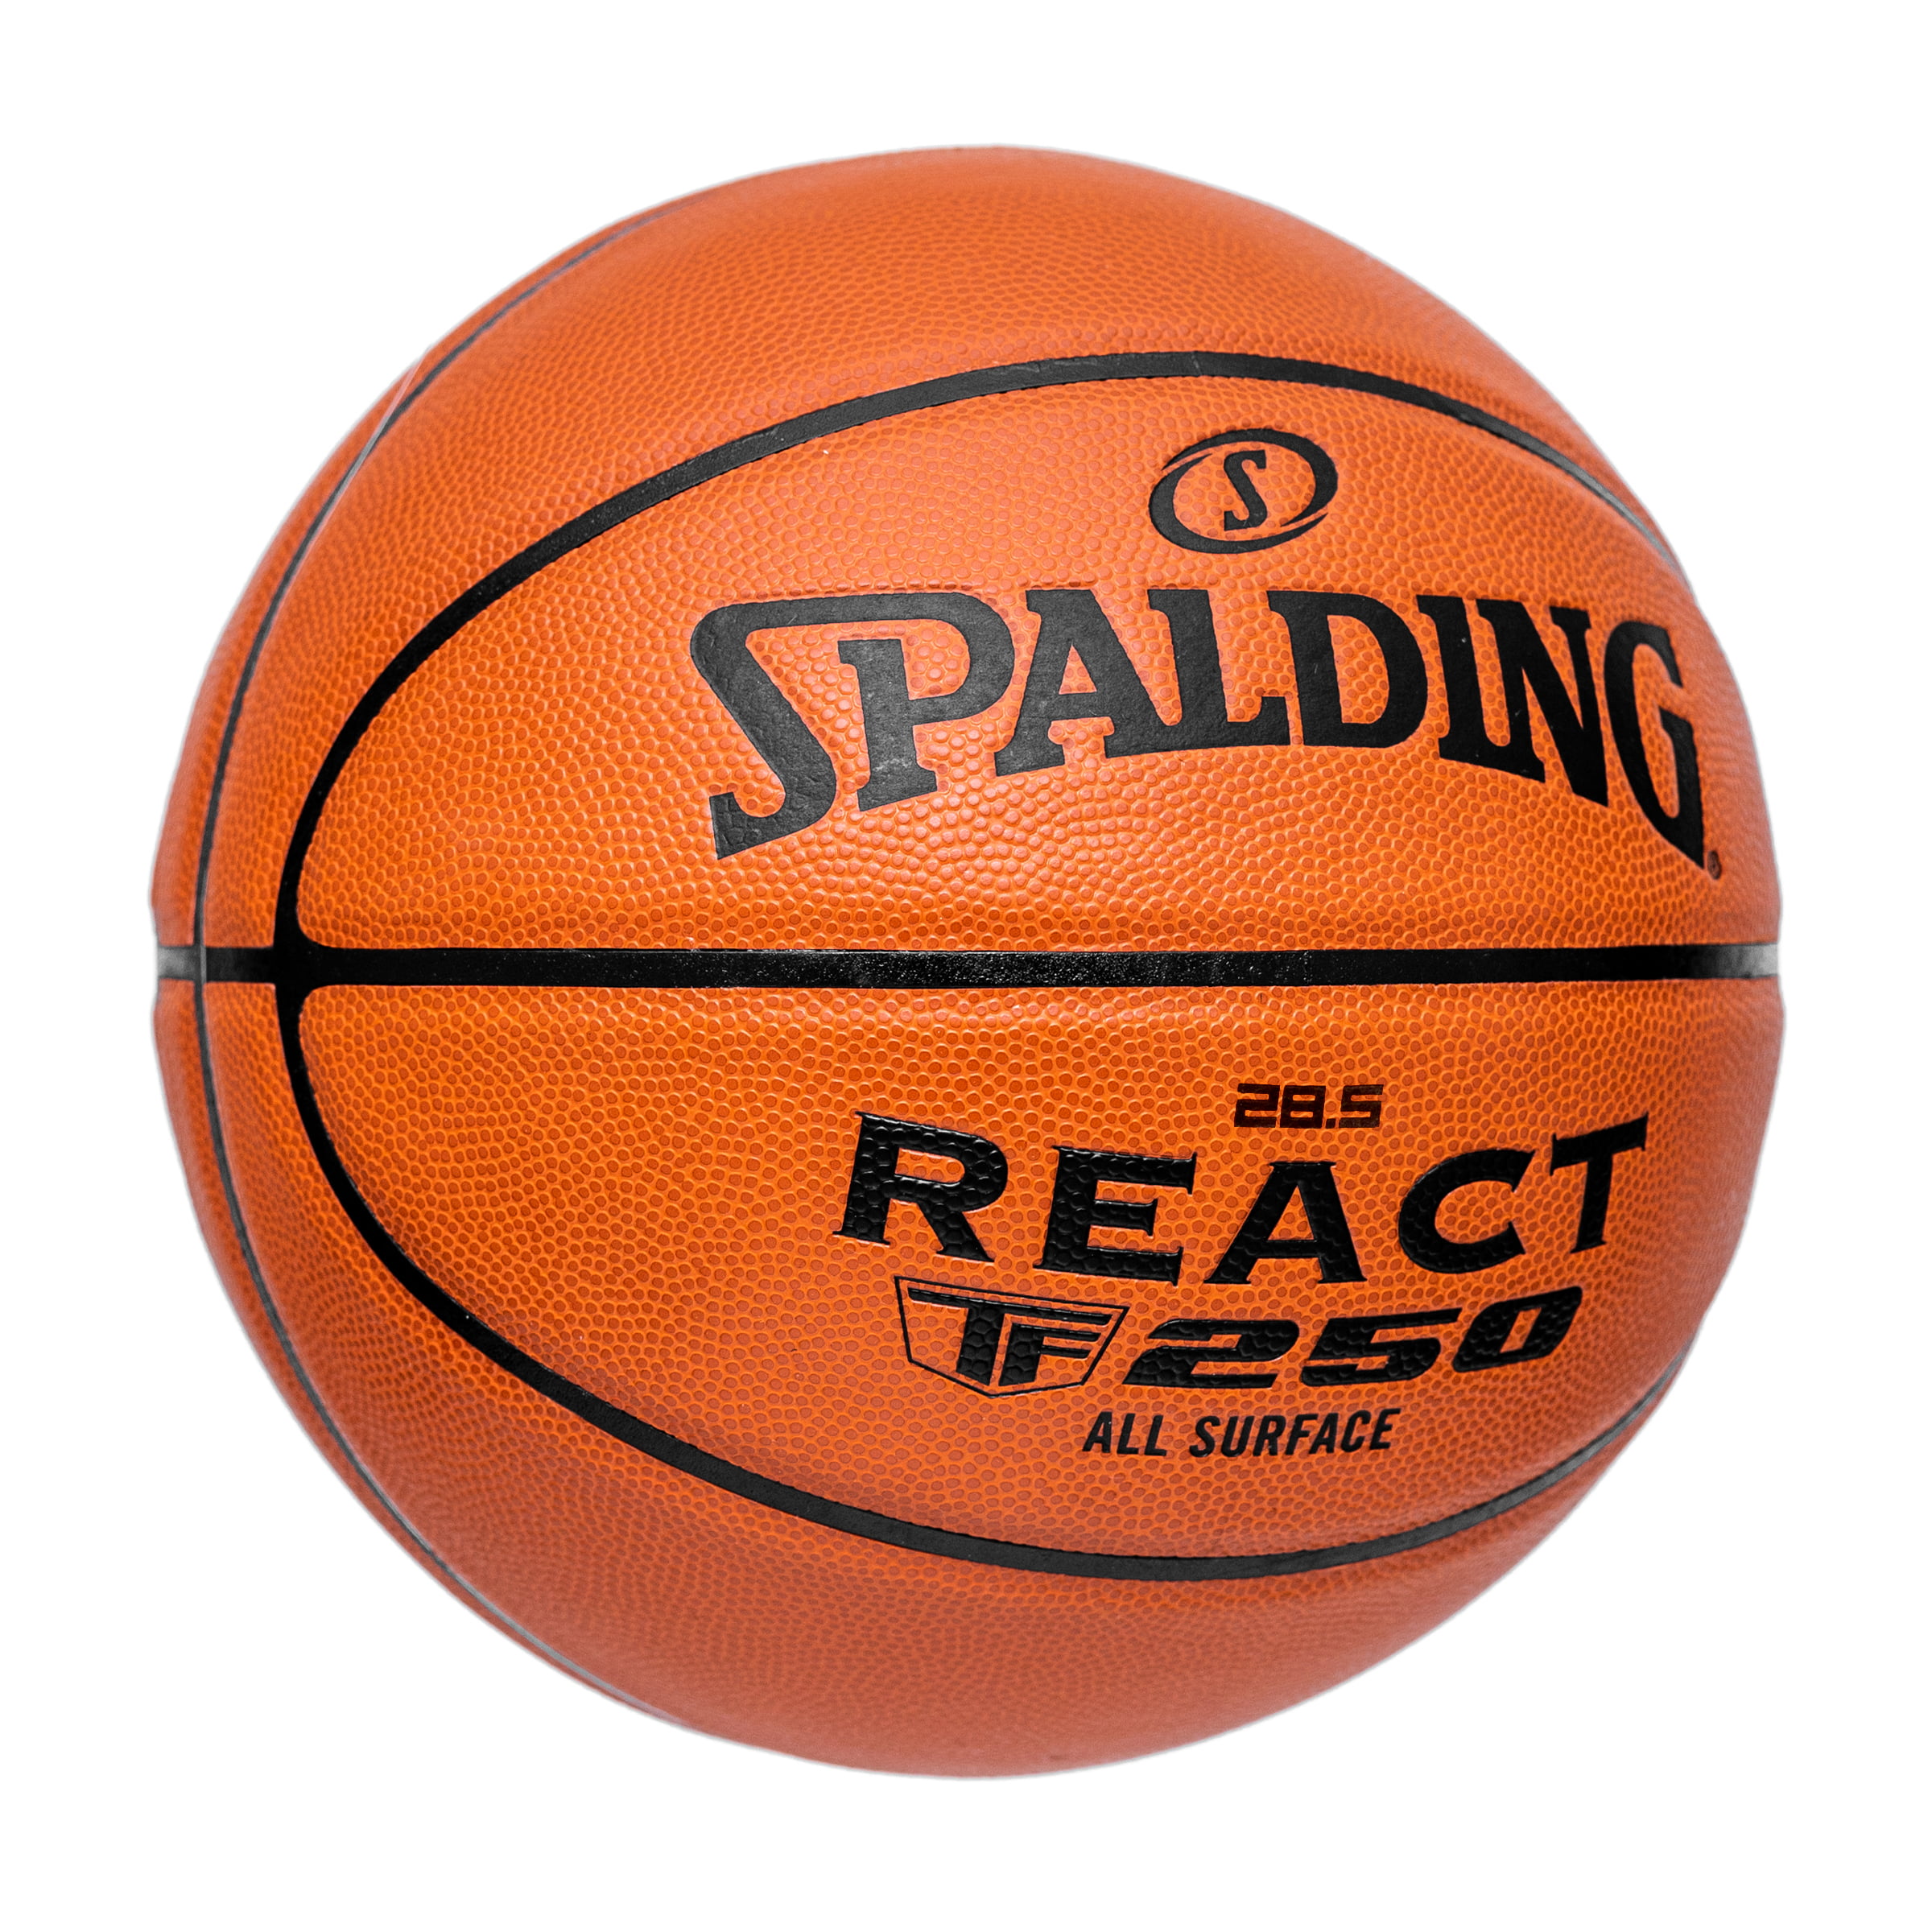 Spalding React TF-250 Indoor-Outdoor Basketball 